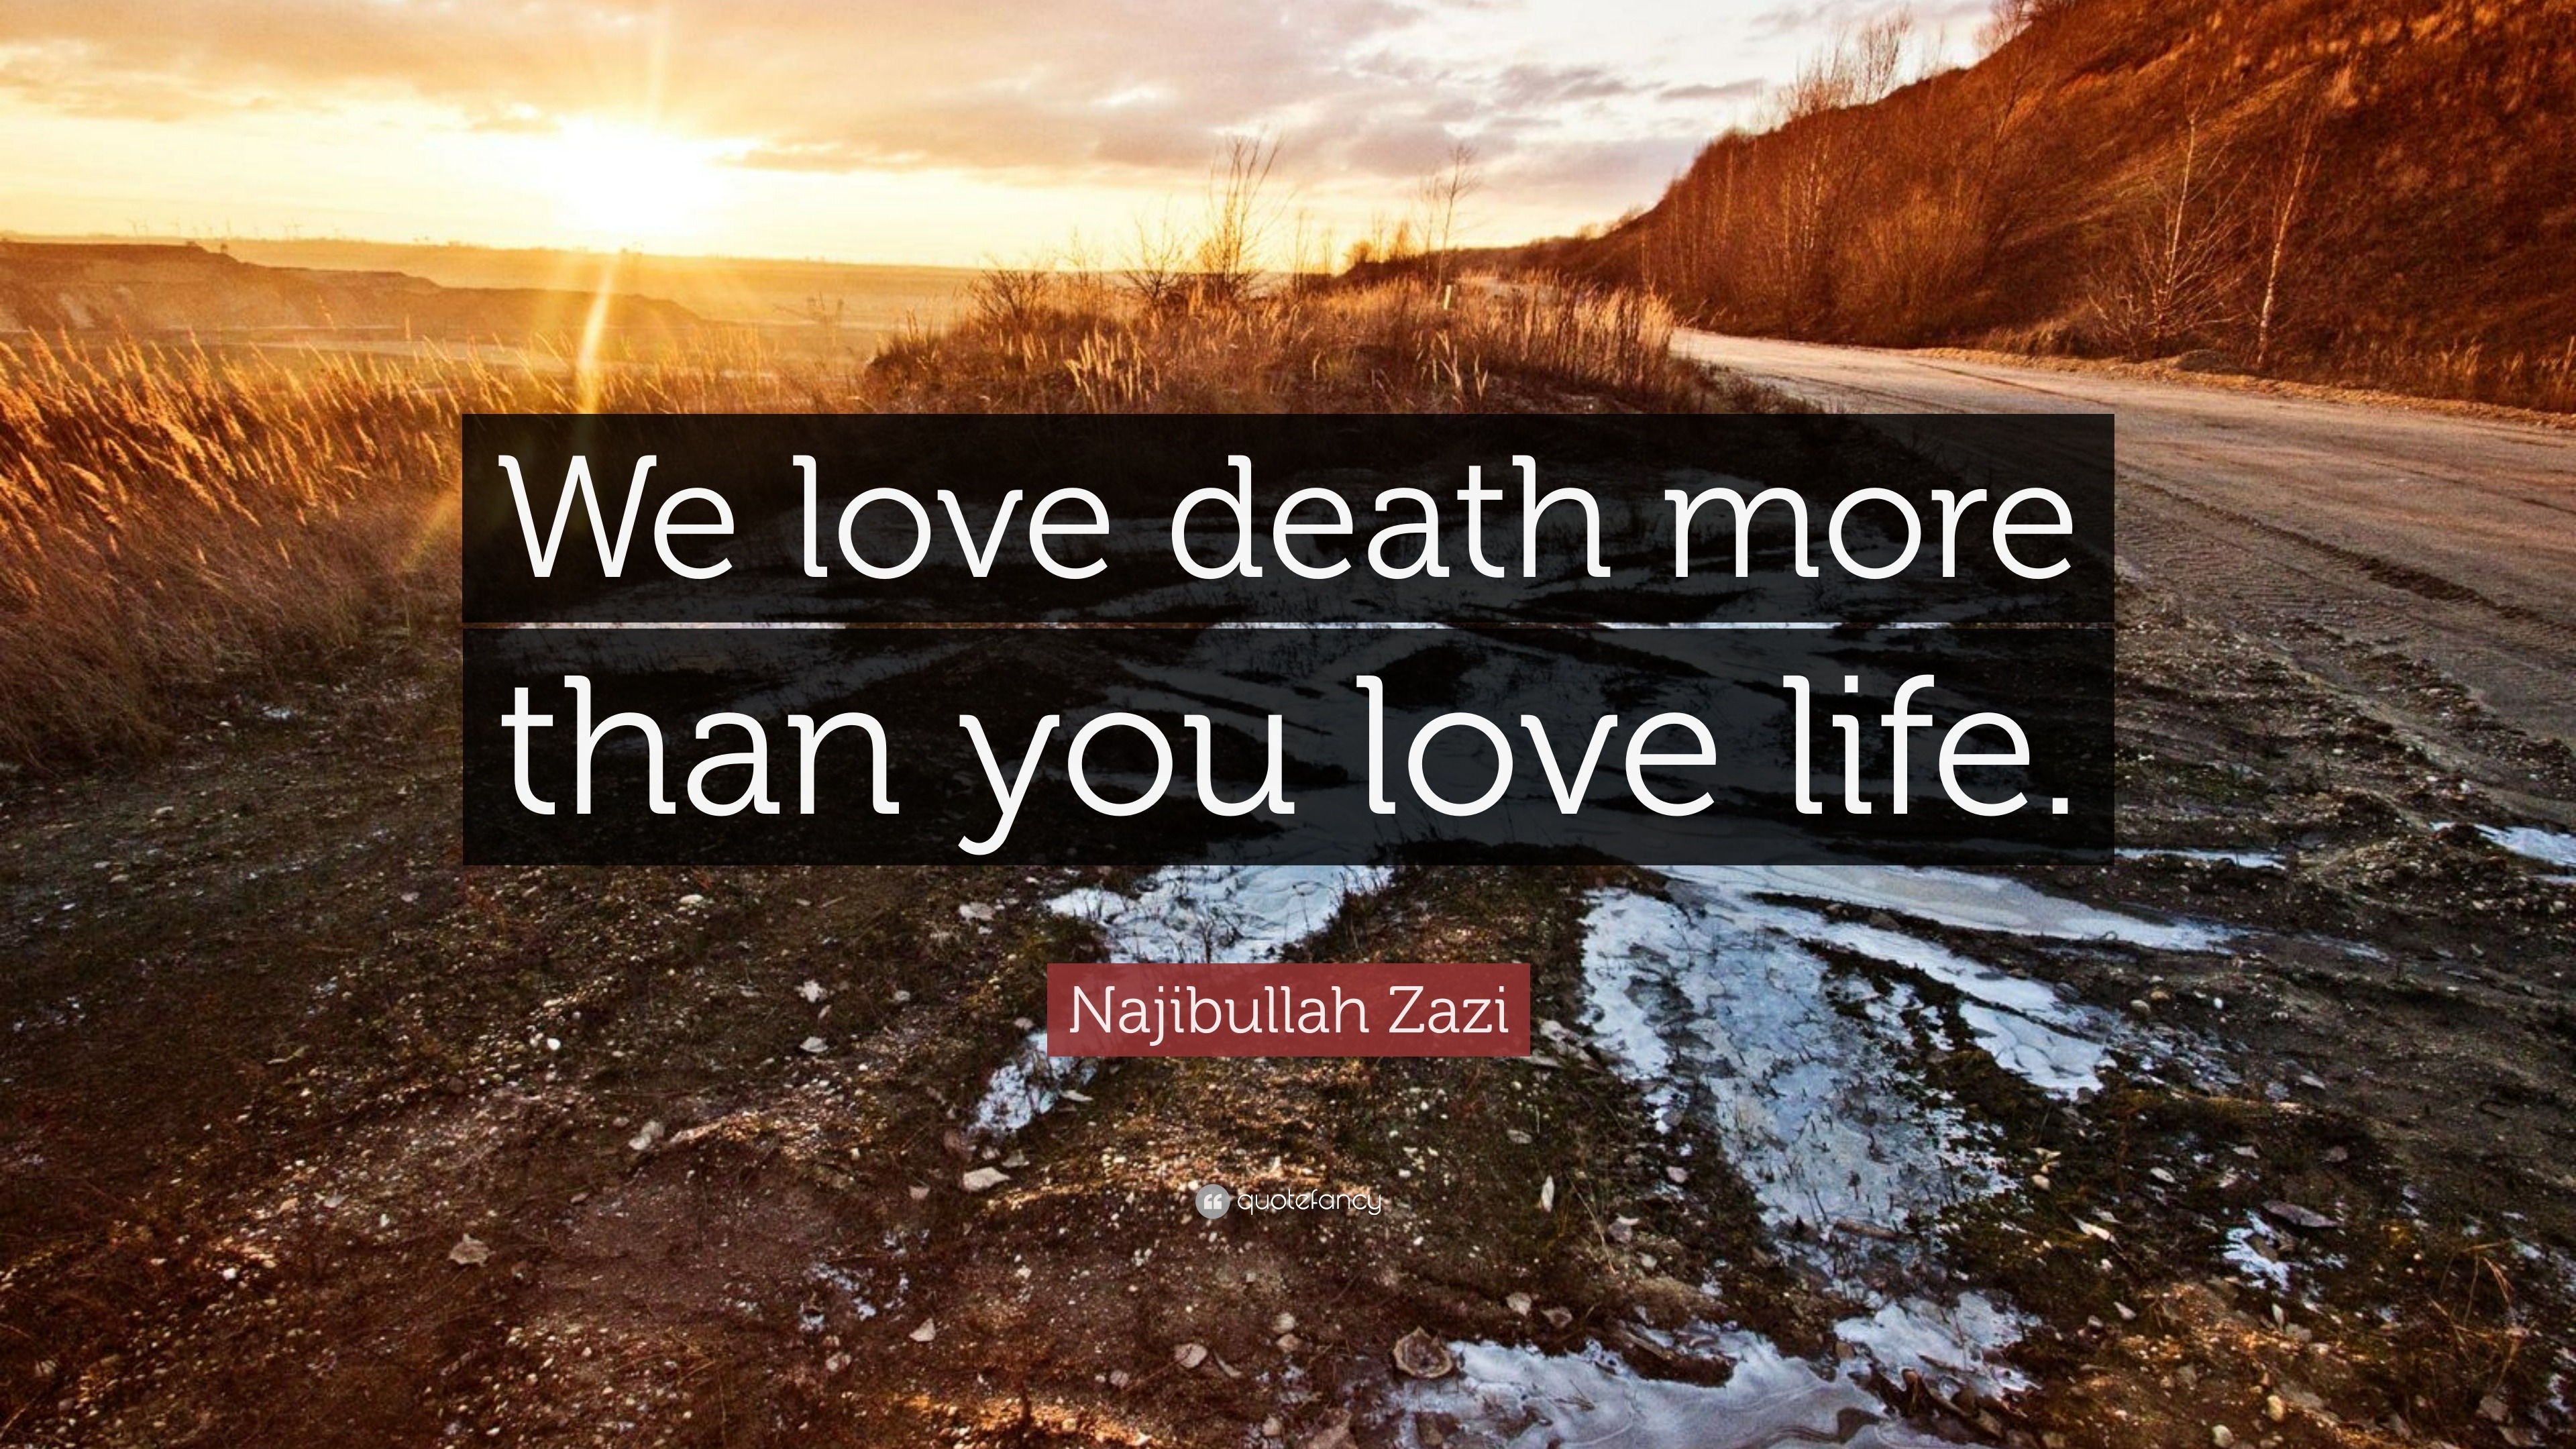 Najibullah Zazi Quote “We love more than you love life ”